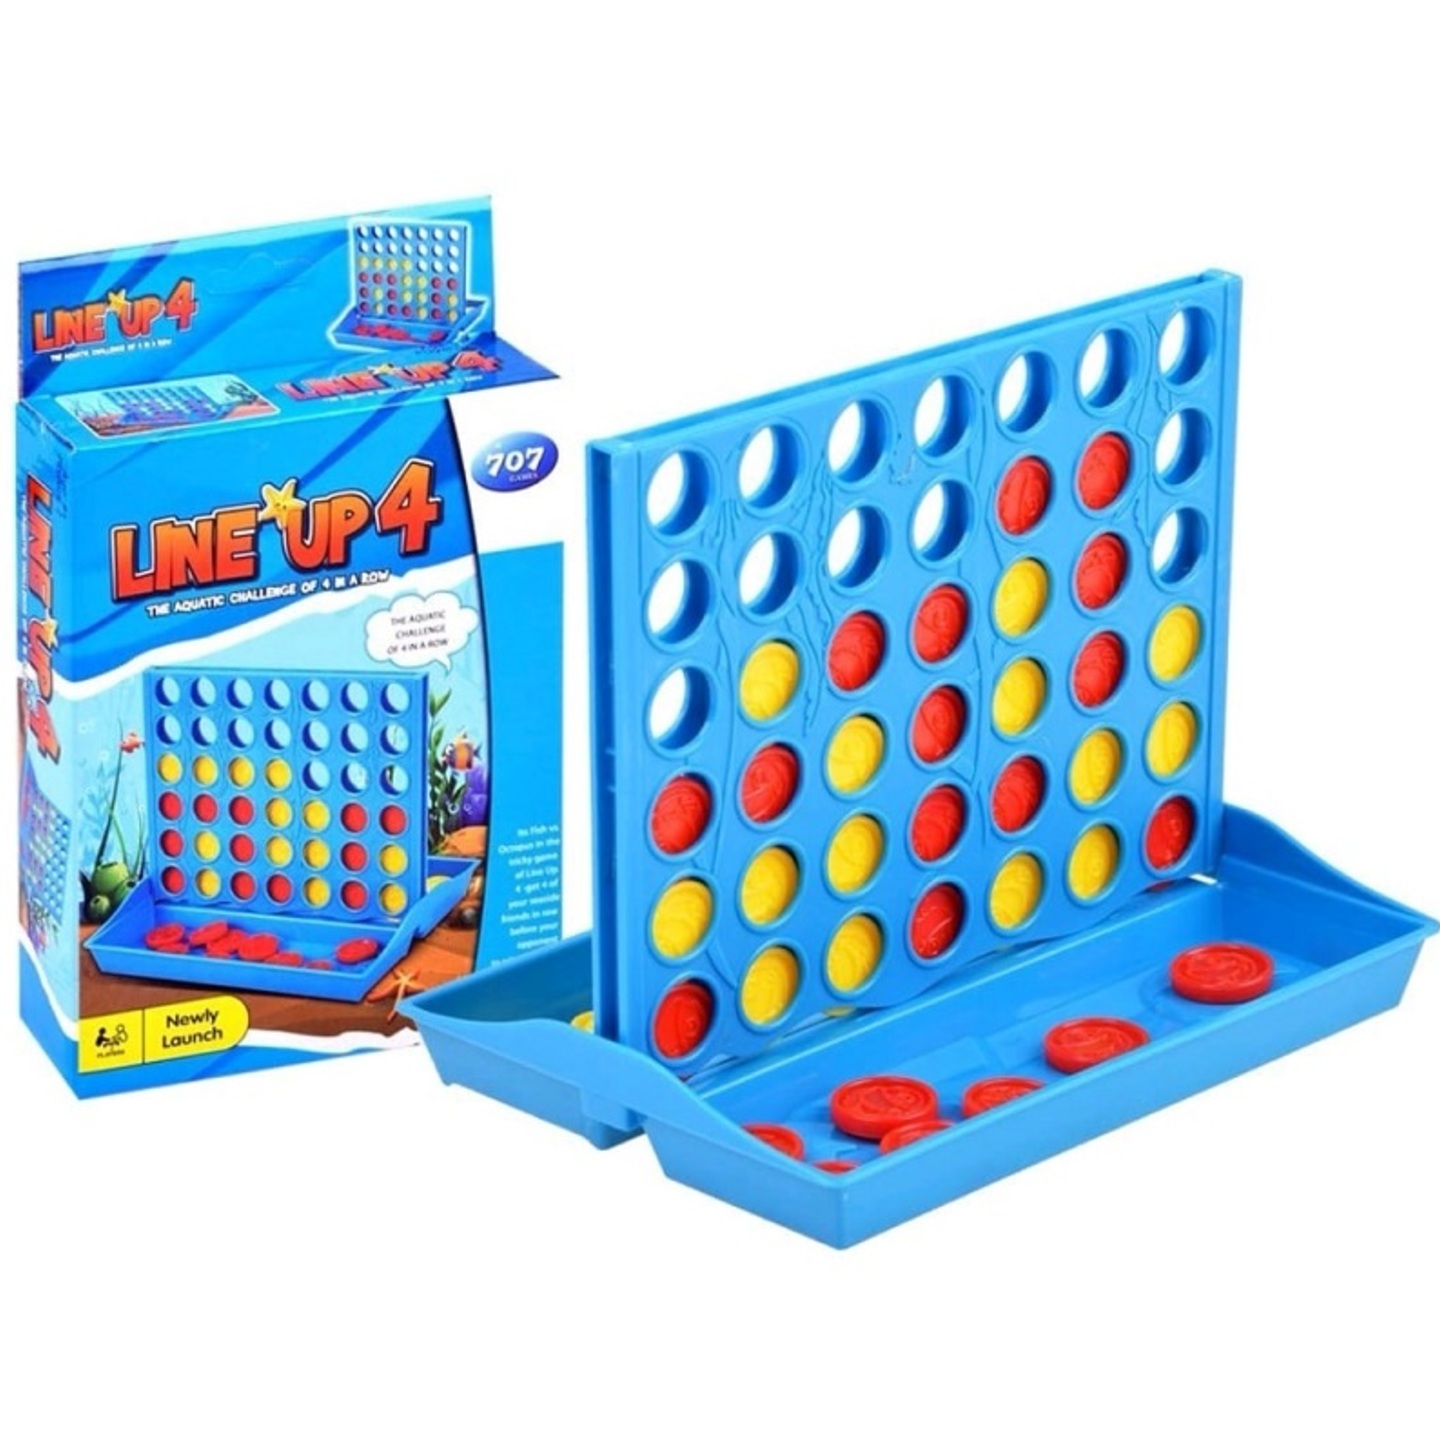 Board Game Play N Learn 707 Math Skills Line Up 4 Game